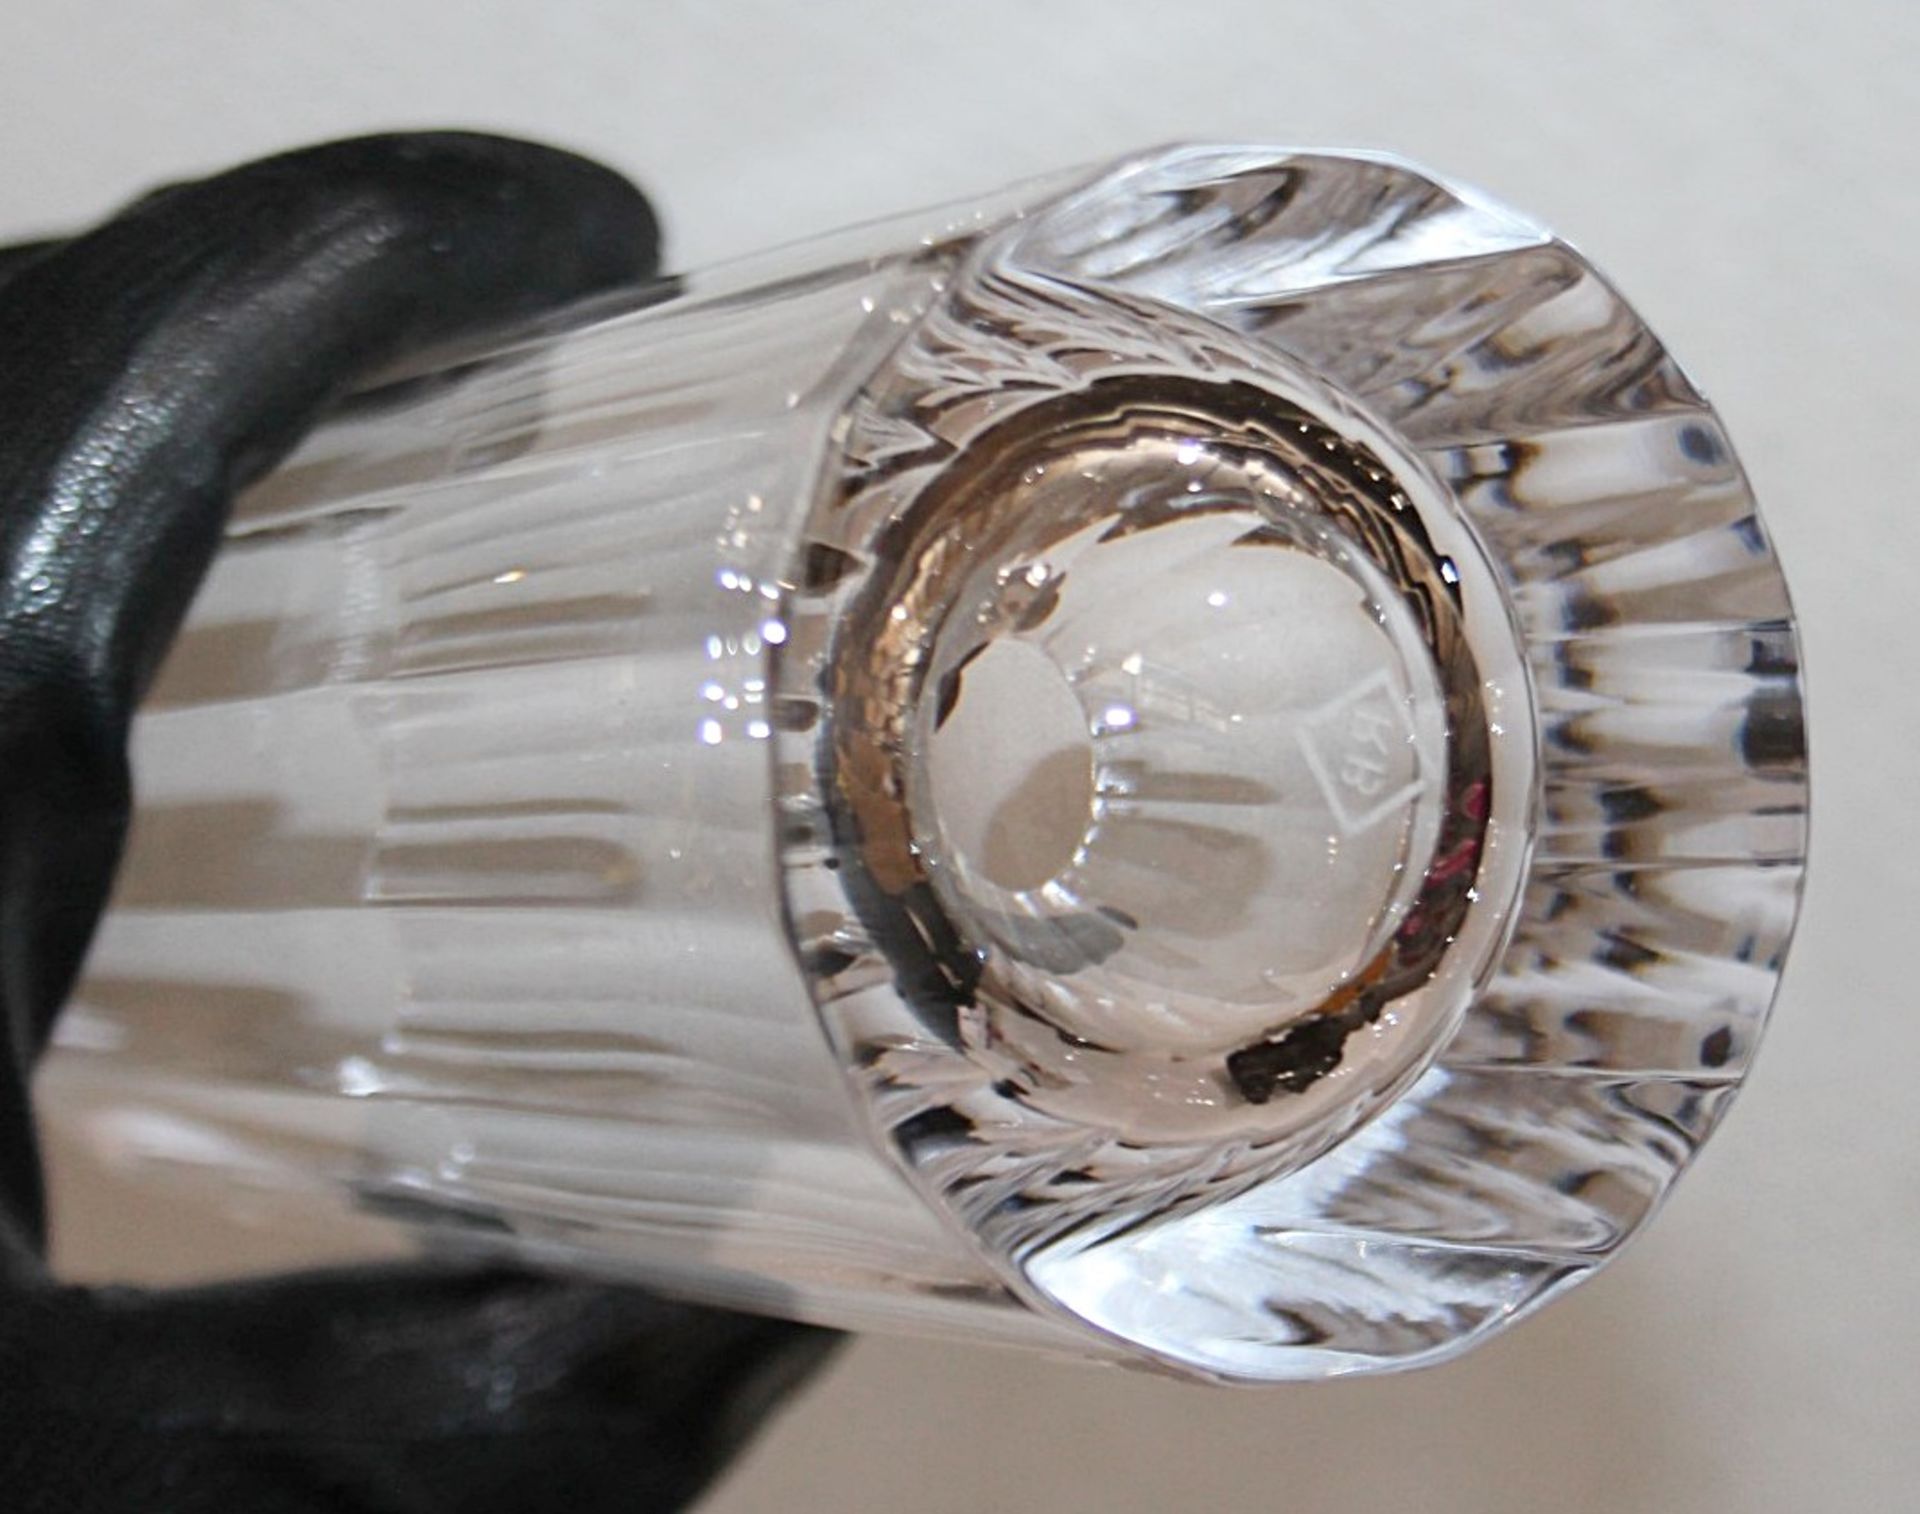 1 x RICHARD BRENDON Fluted Handmade Crystal Highball Glass (380ml) - Original Price £90.00 - - Image 3 of 8